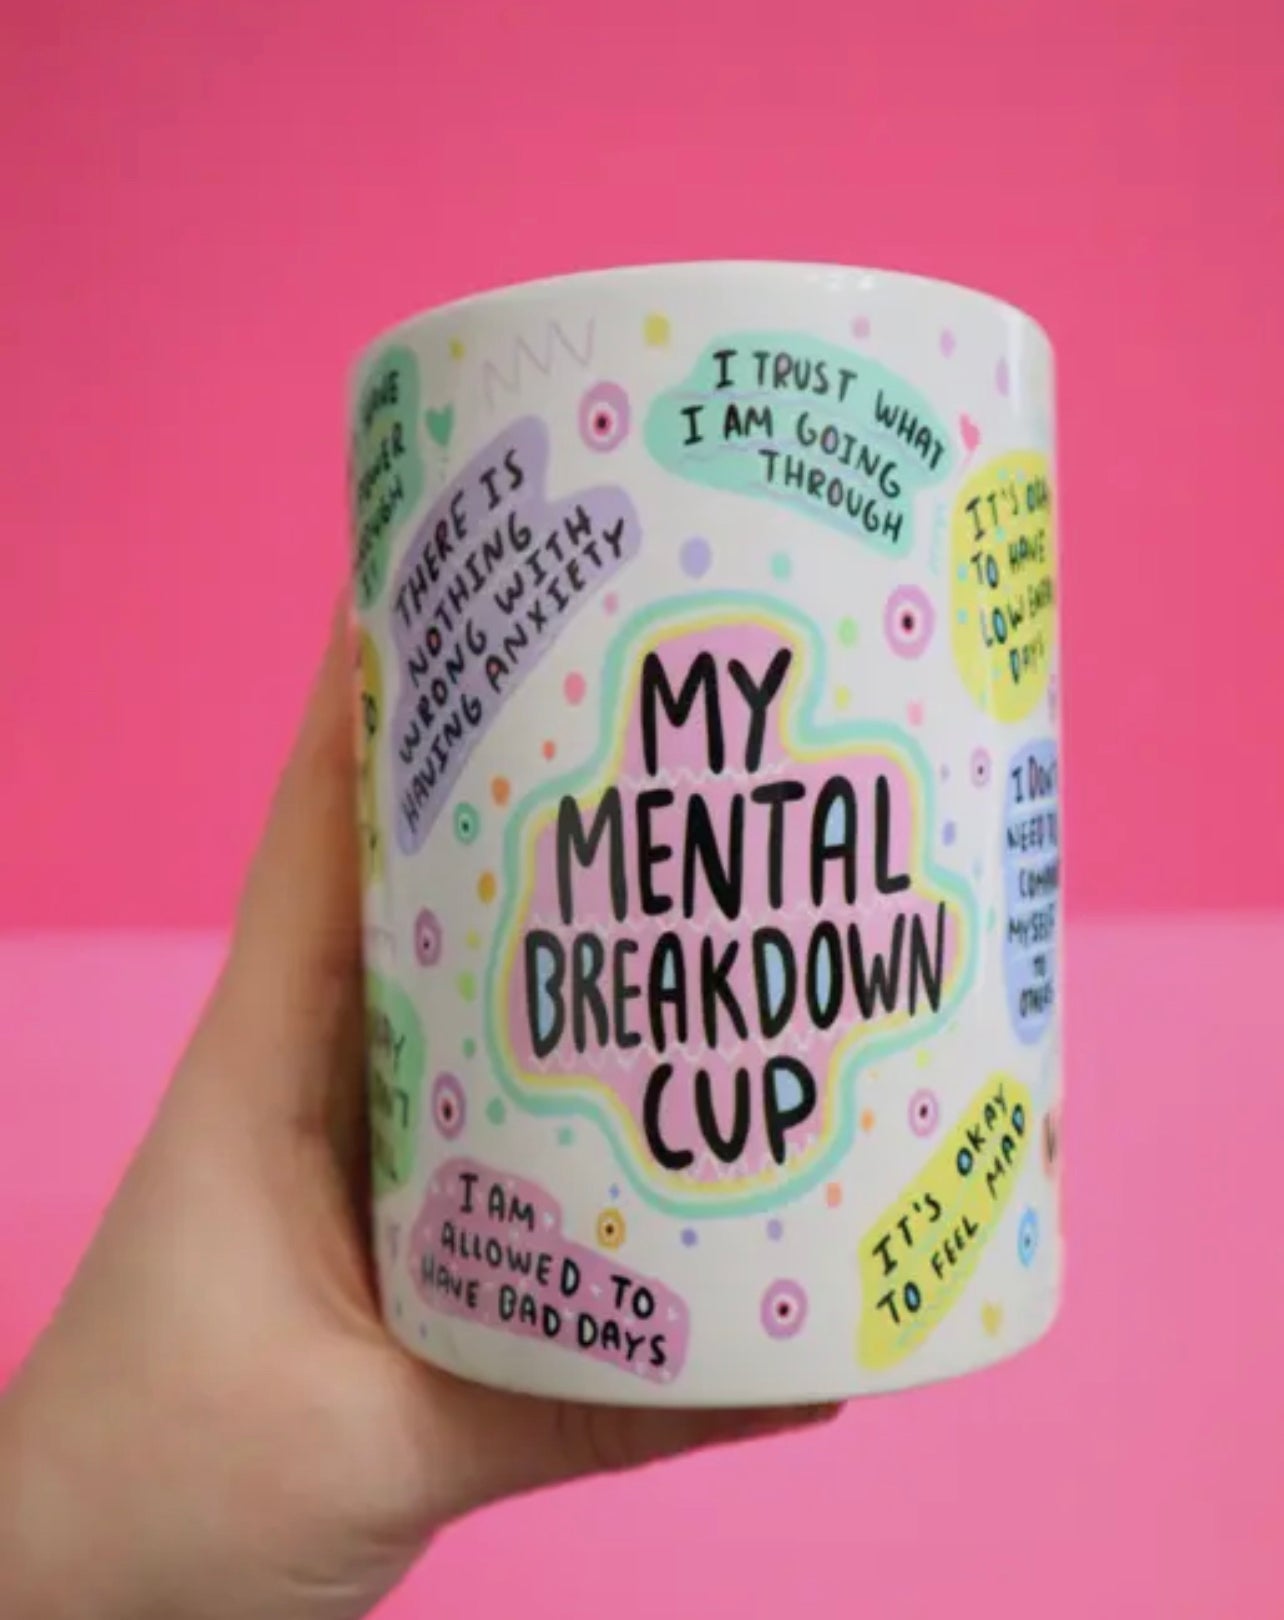 The Mental Breakdown Mug